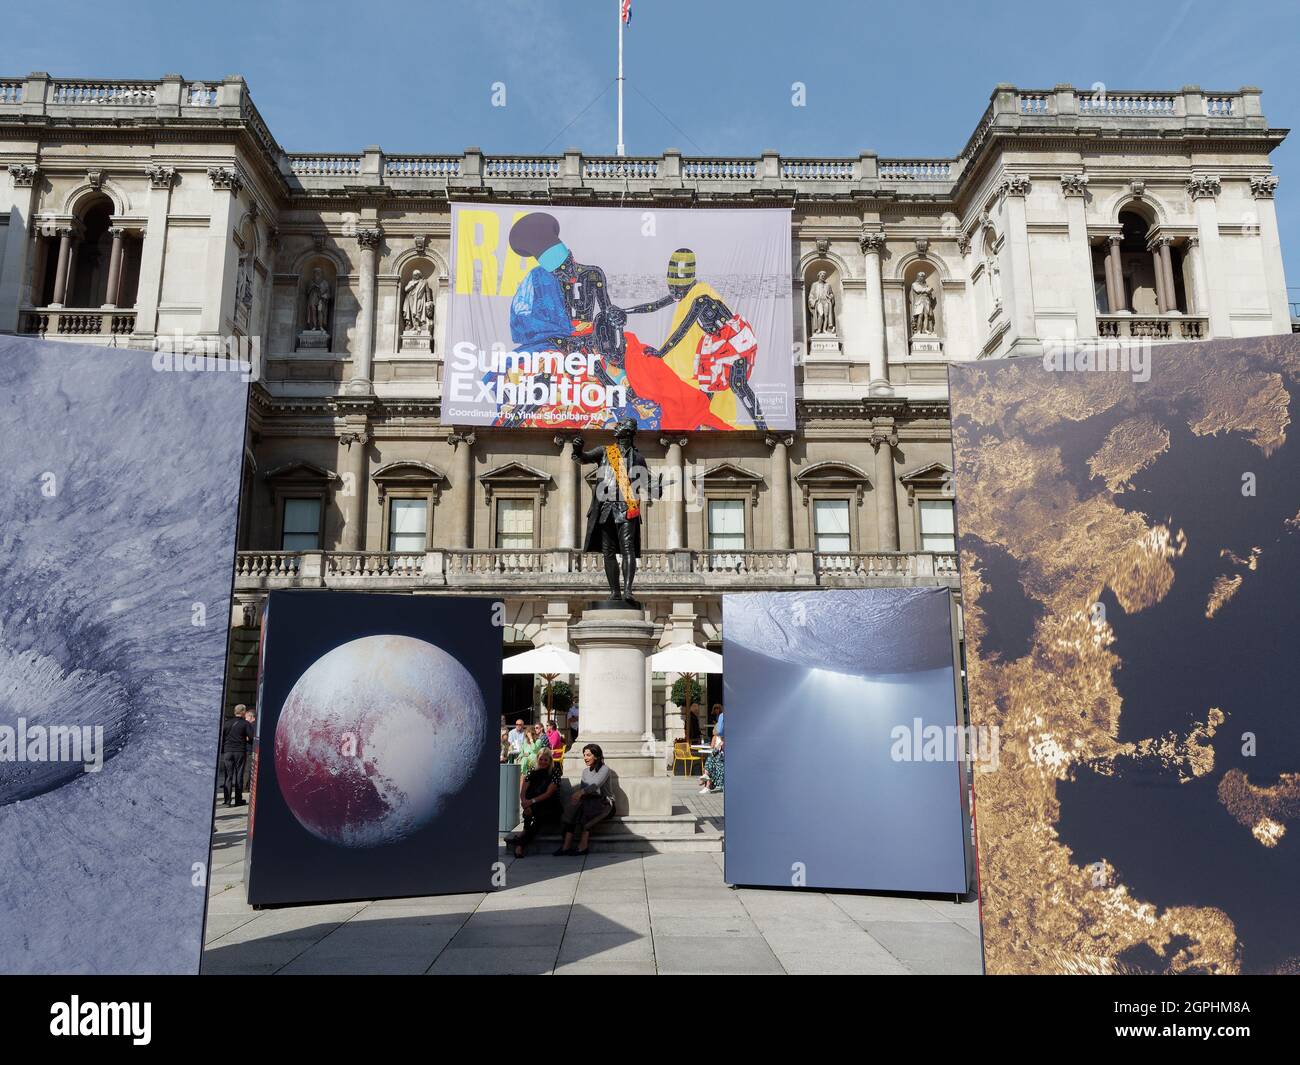 London, Greater London, England, September 21 2021: Kunstausstellung vor der Royal Academy of Arts im Burlington House auf Piccadilly. Stockfoto